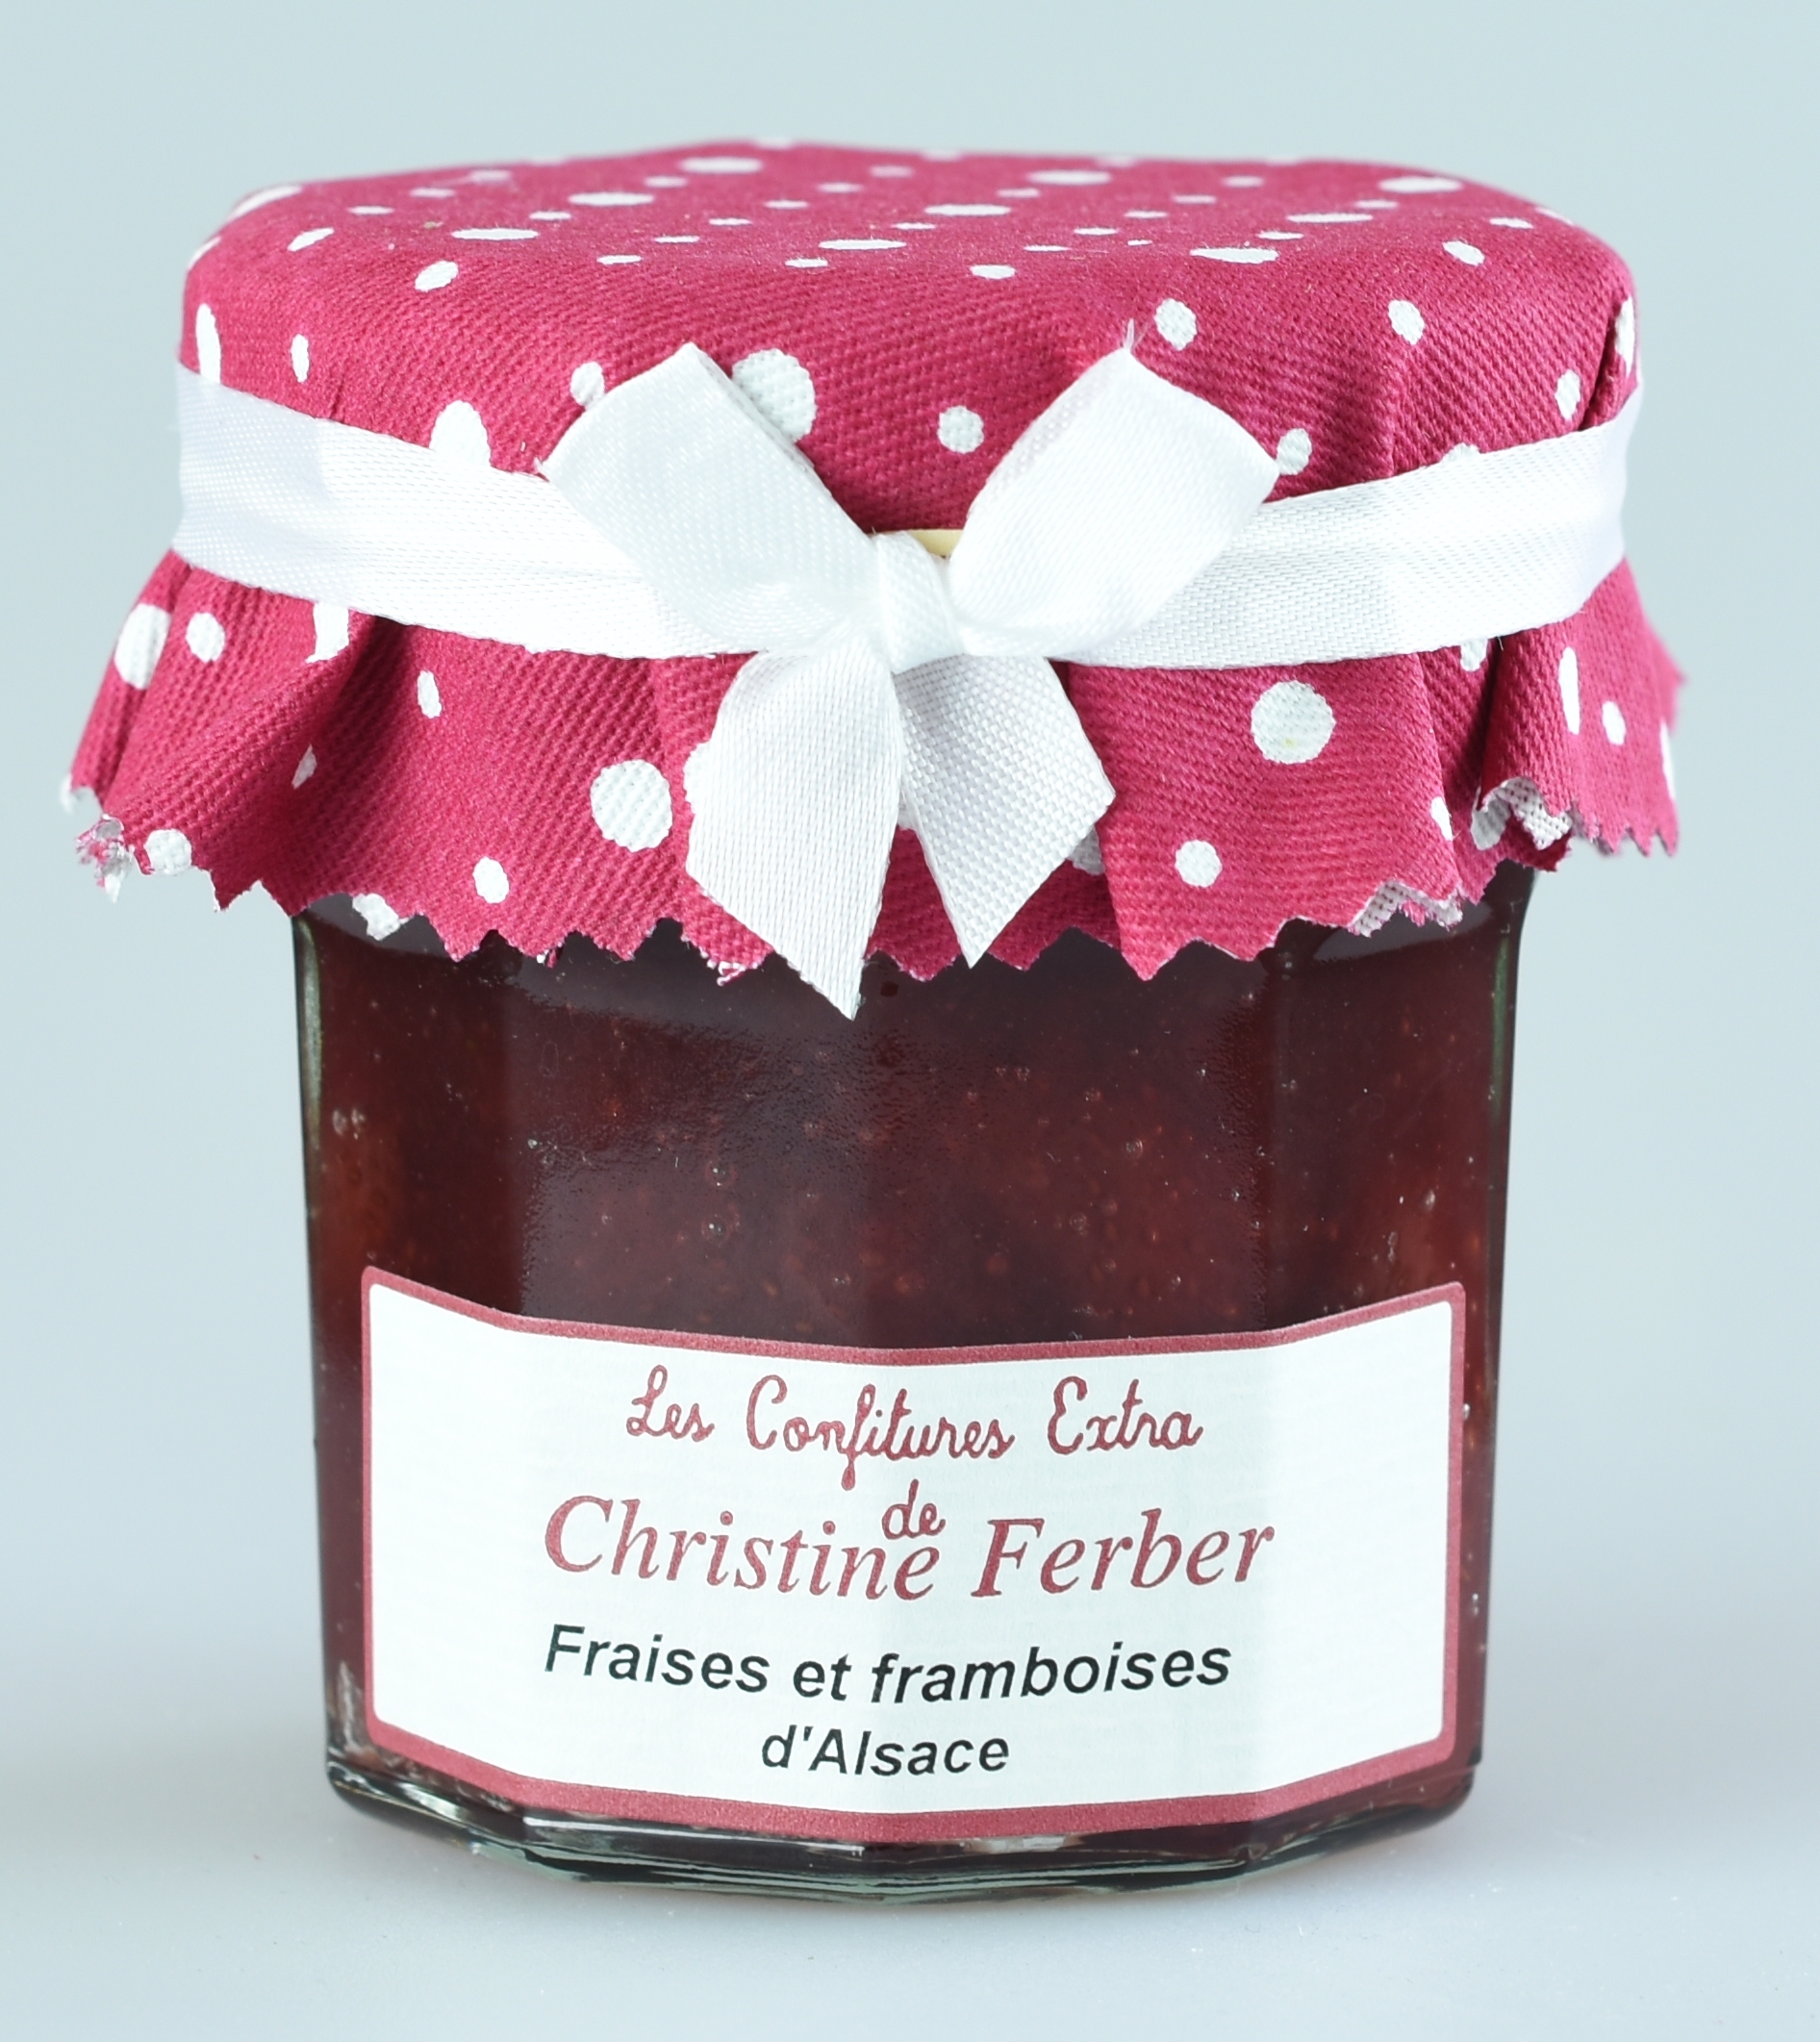 Erdbeeren und Himbeeren, Confiture extra, Fraise et Framboise, Christine Ferber 0,22 kg